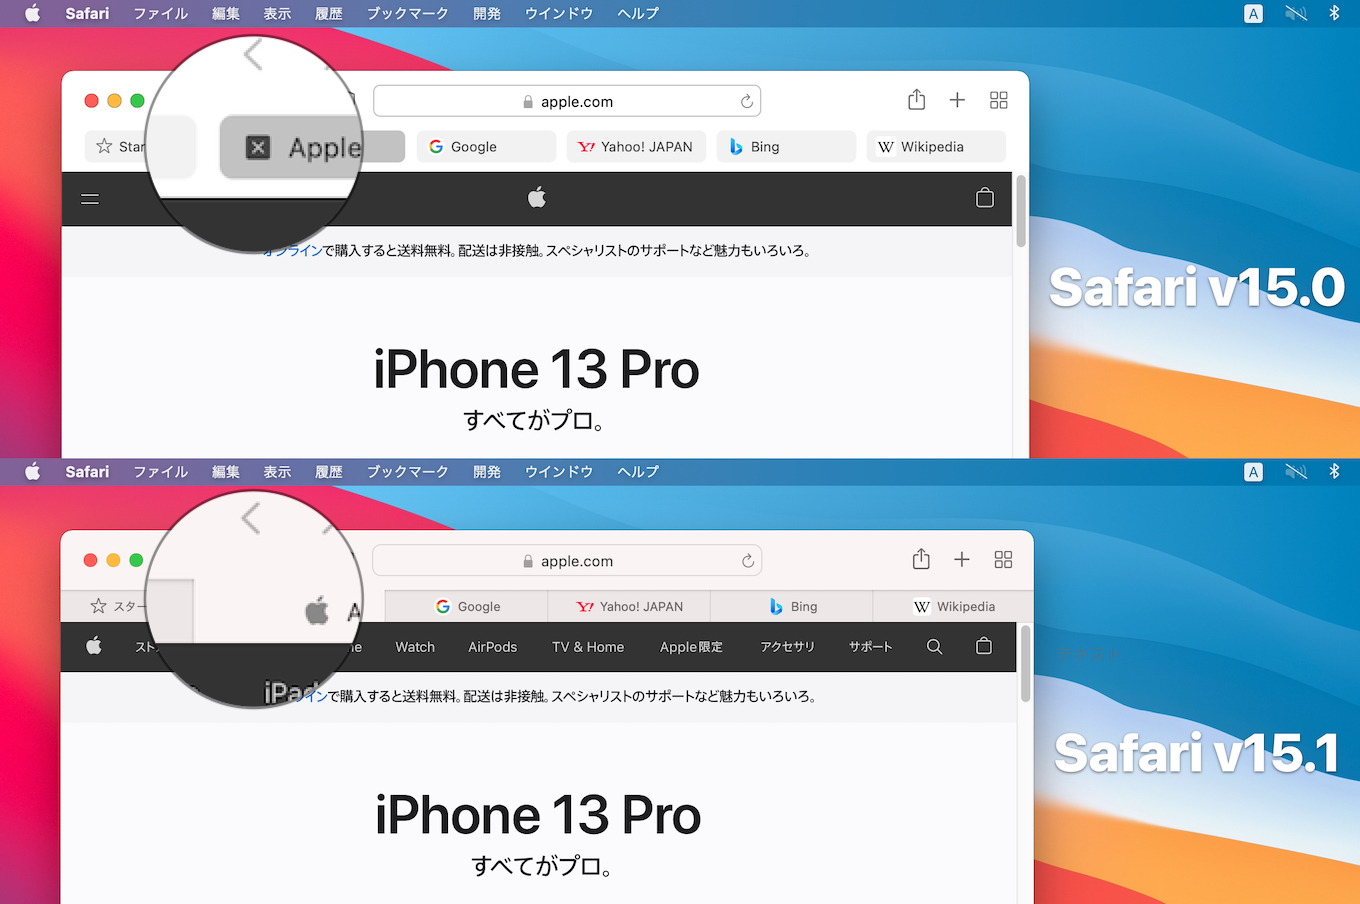 Safari 15.0とSafari 15.1